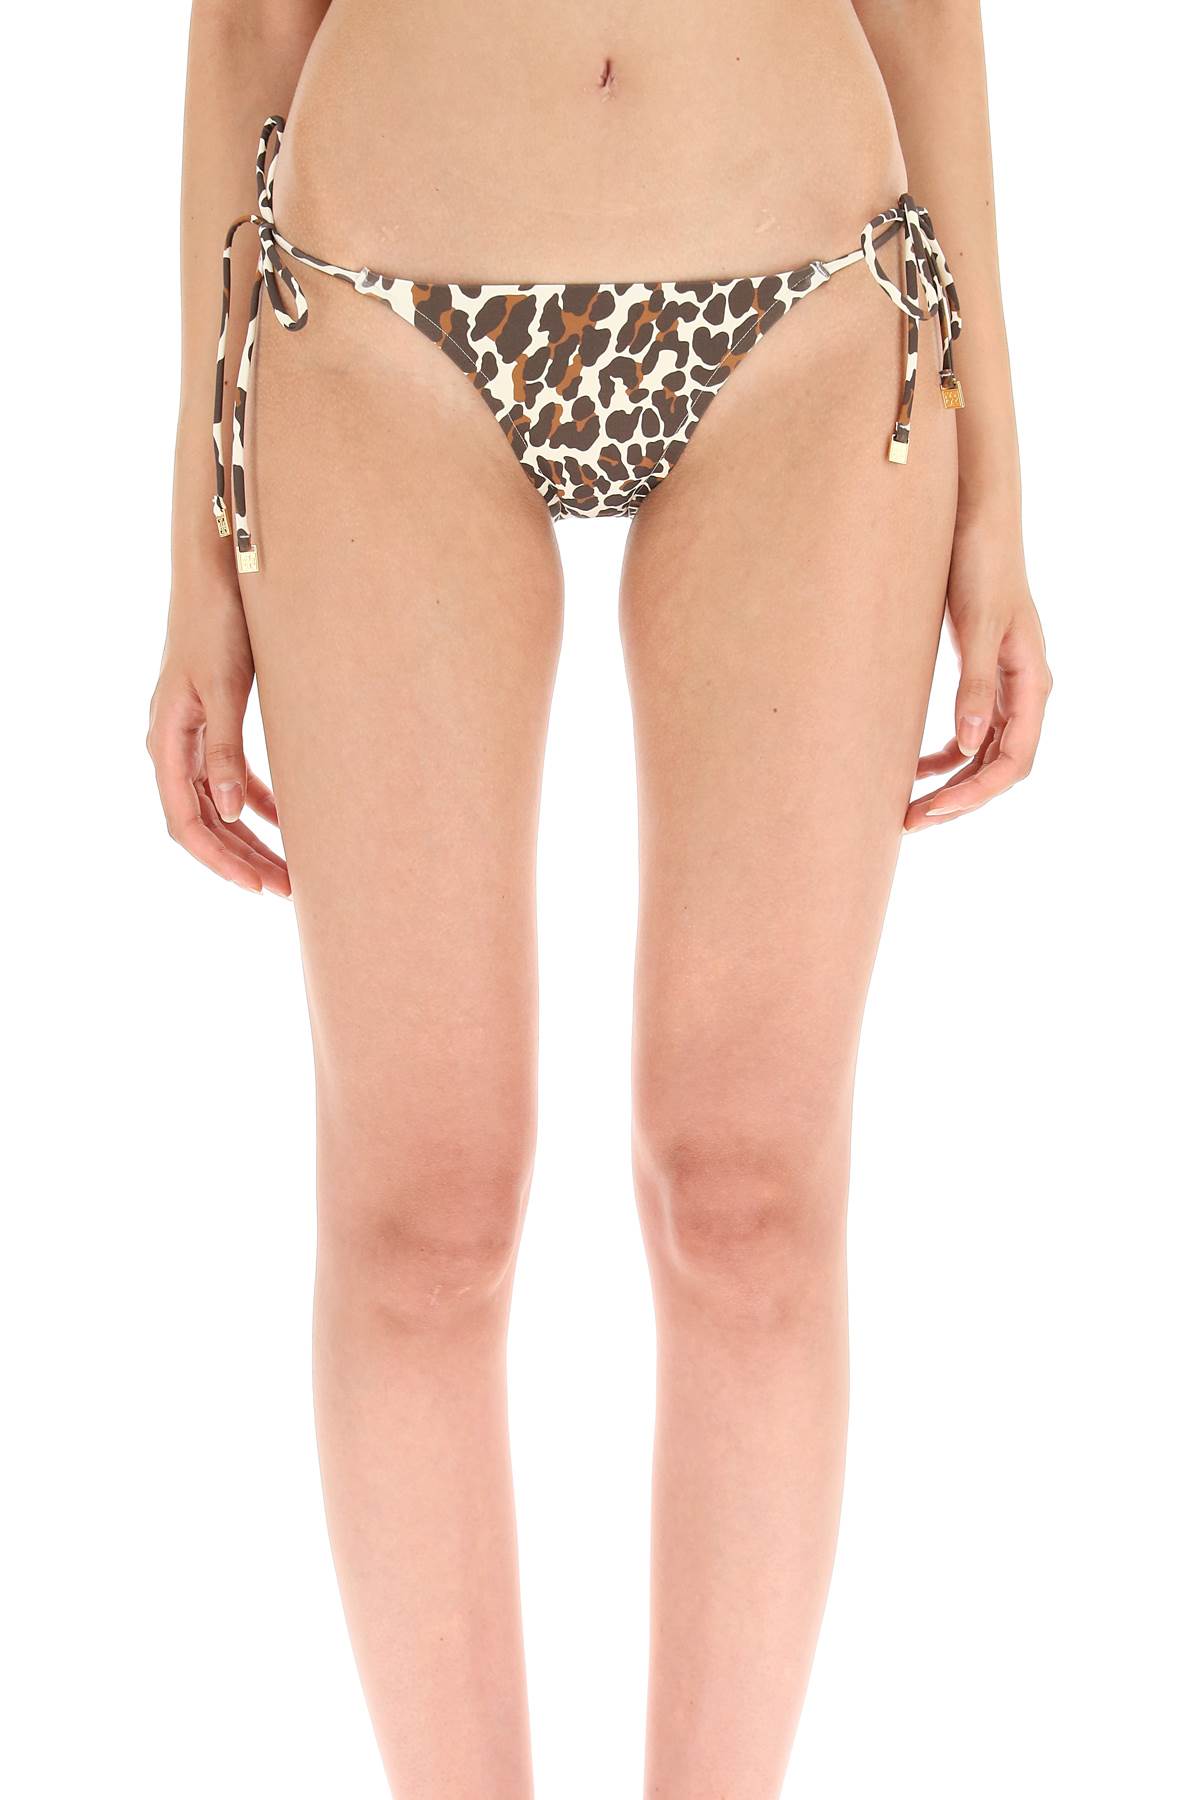 Tory burch leopard print bikini bottom-1